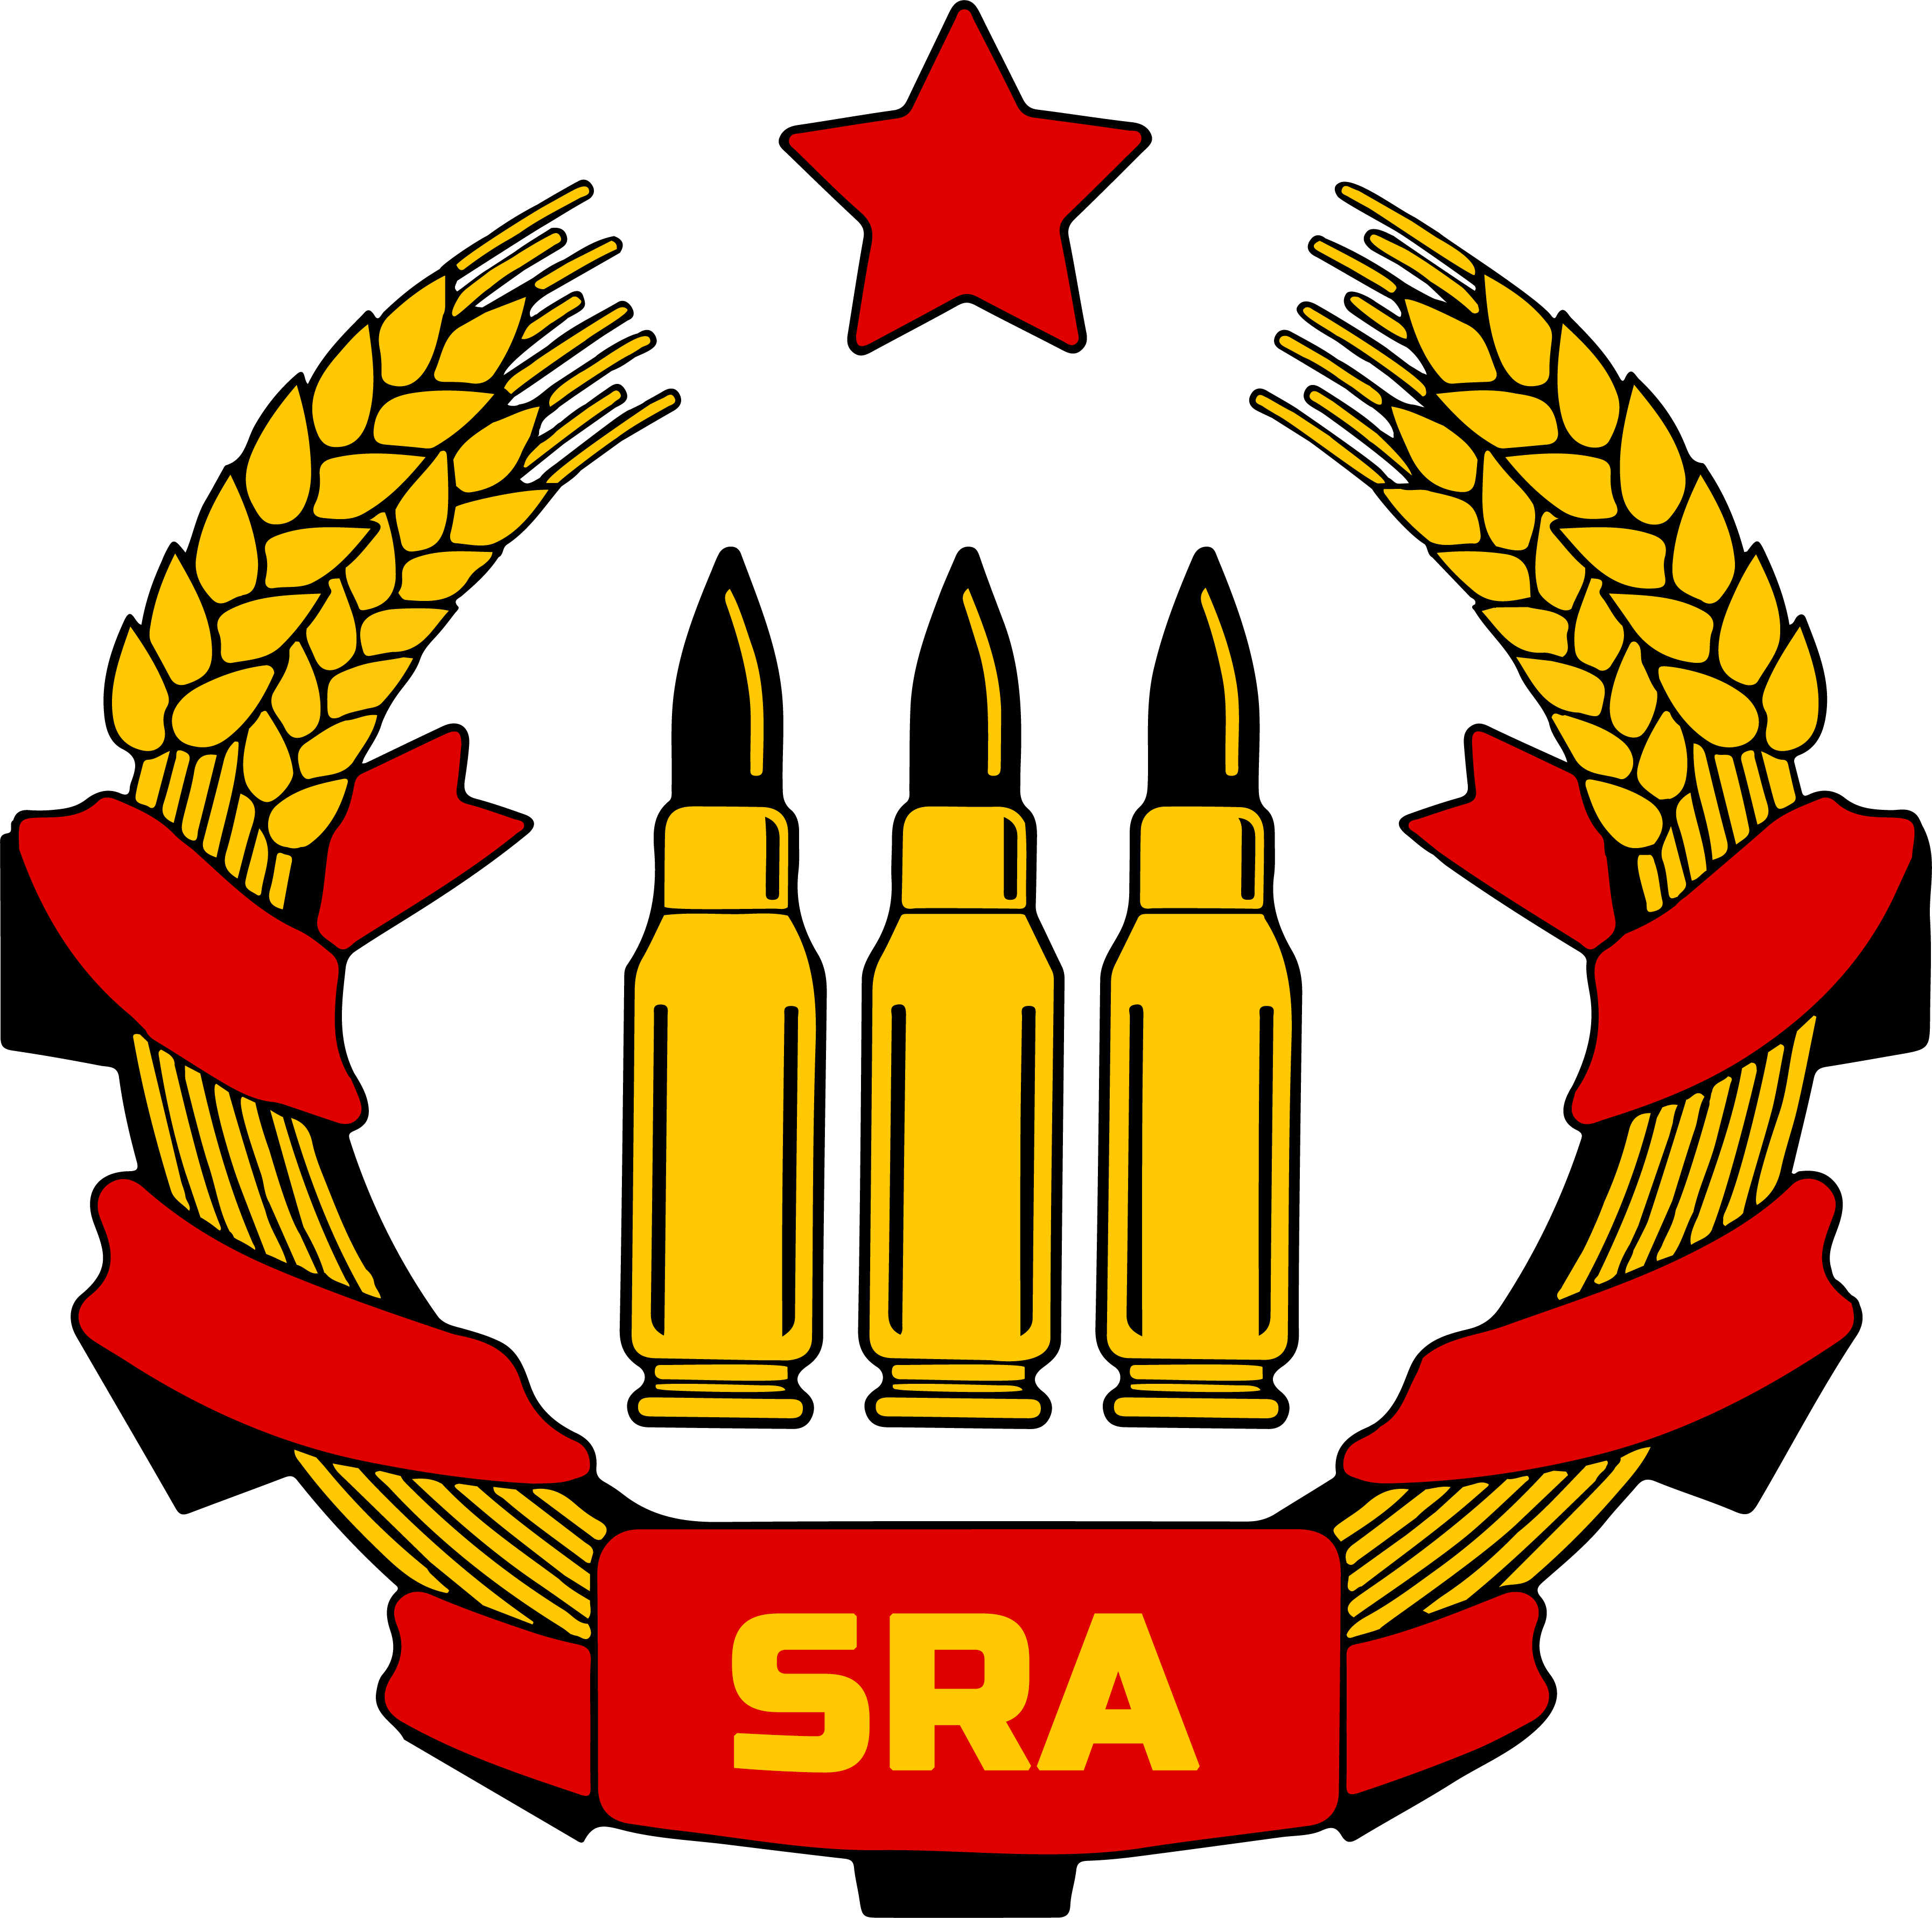 The Socialist Rifle Association